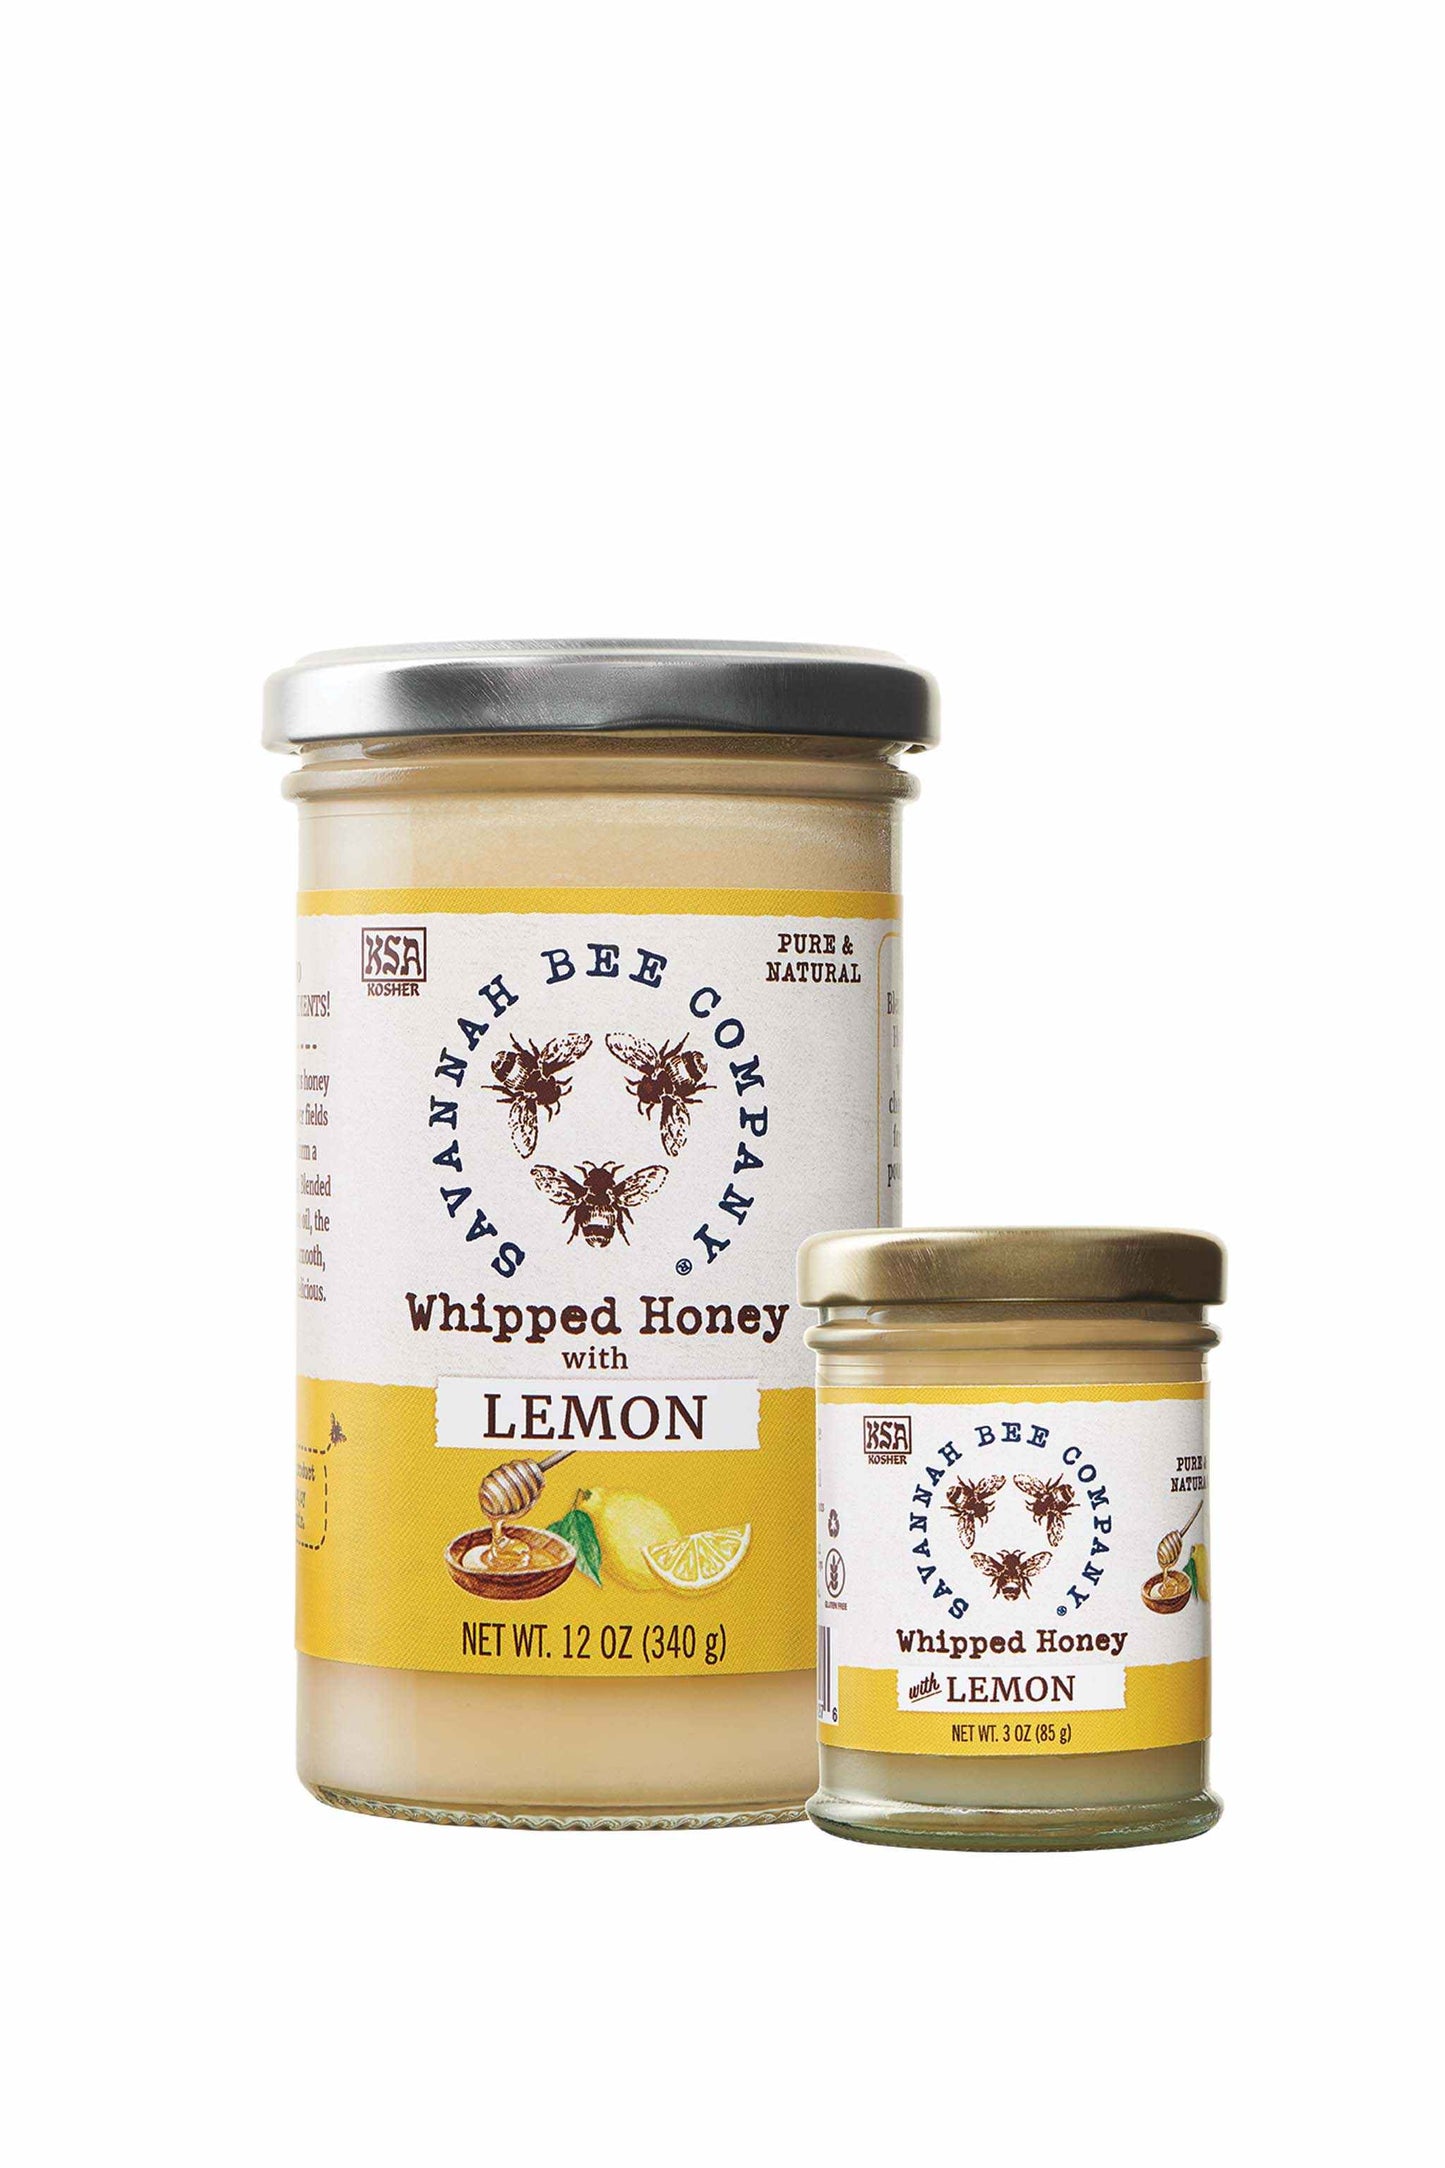 Whipped Honey with Lemon 12 oz. and 3 oz.